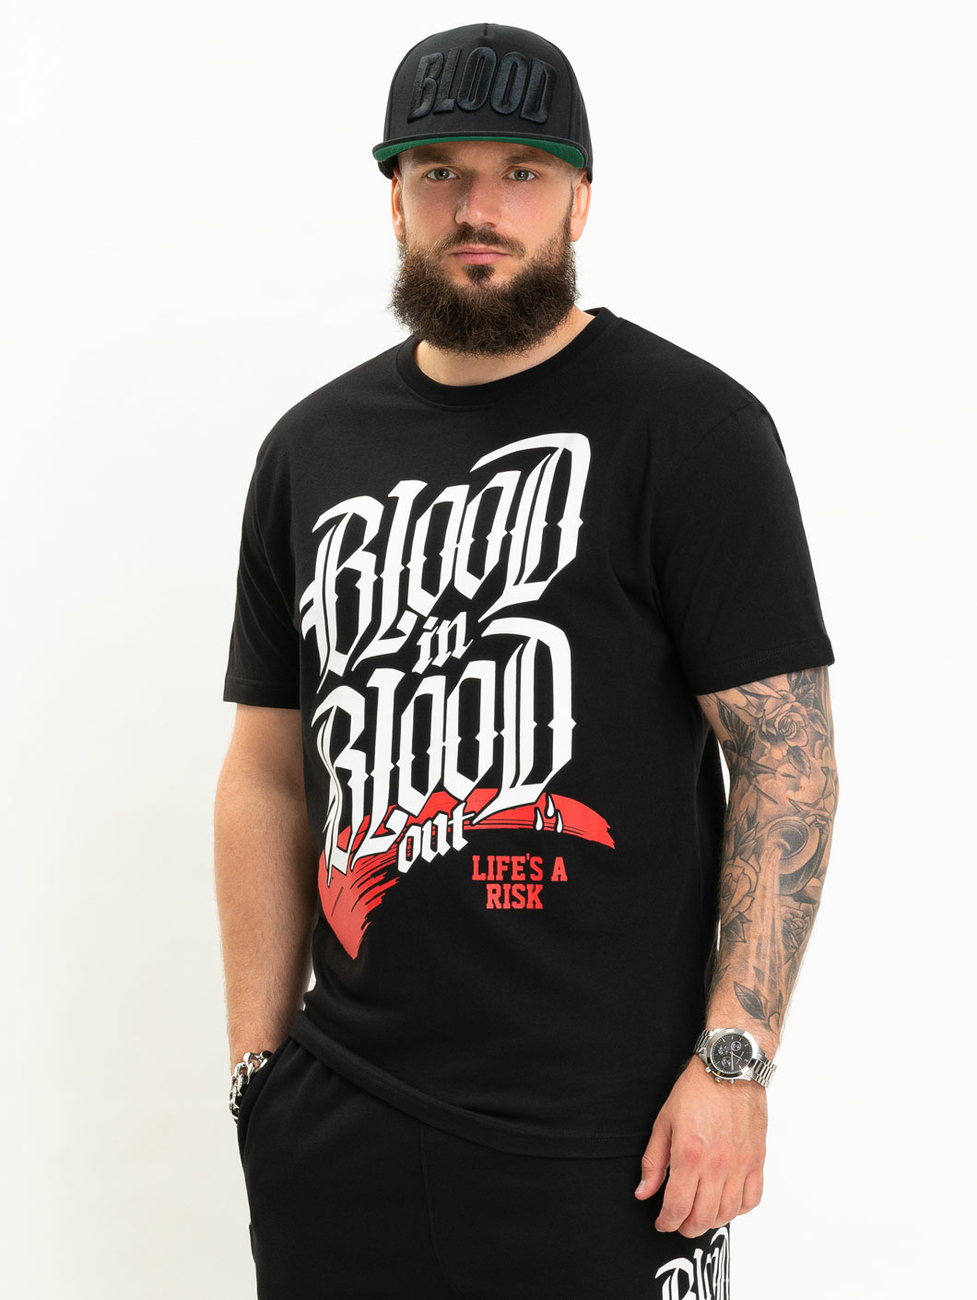 Blood In Blood Out Tranjeros T-Shirt XL